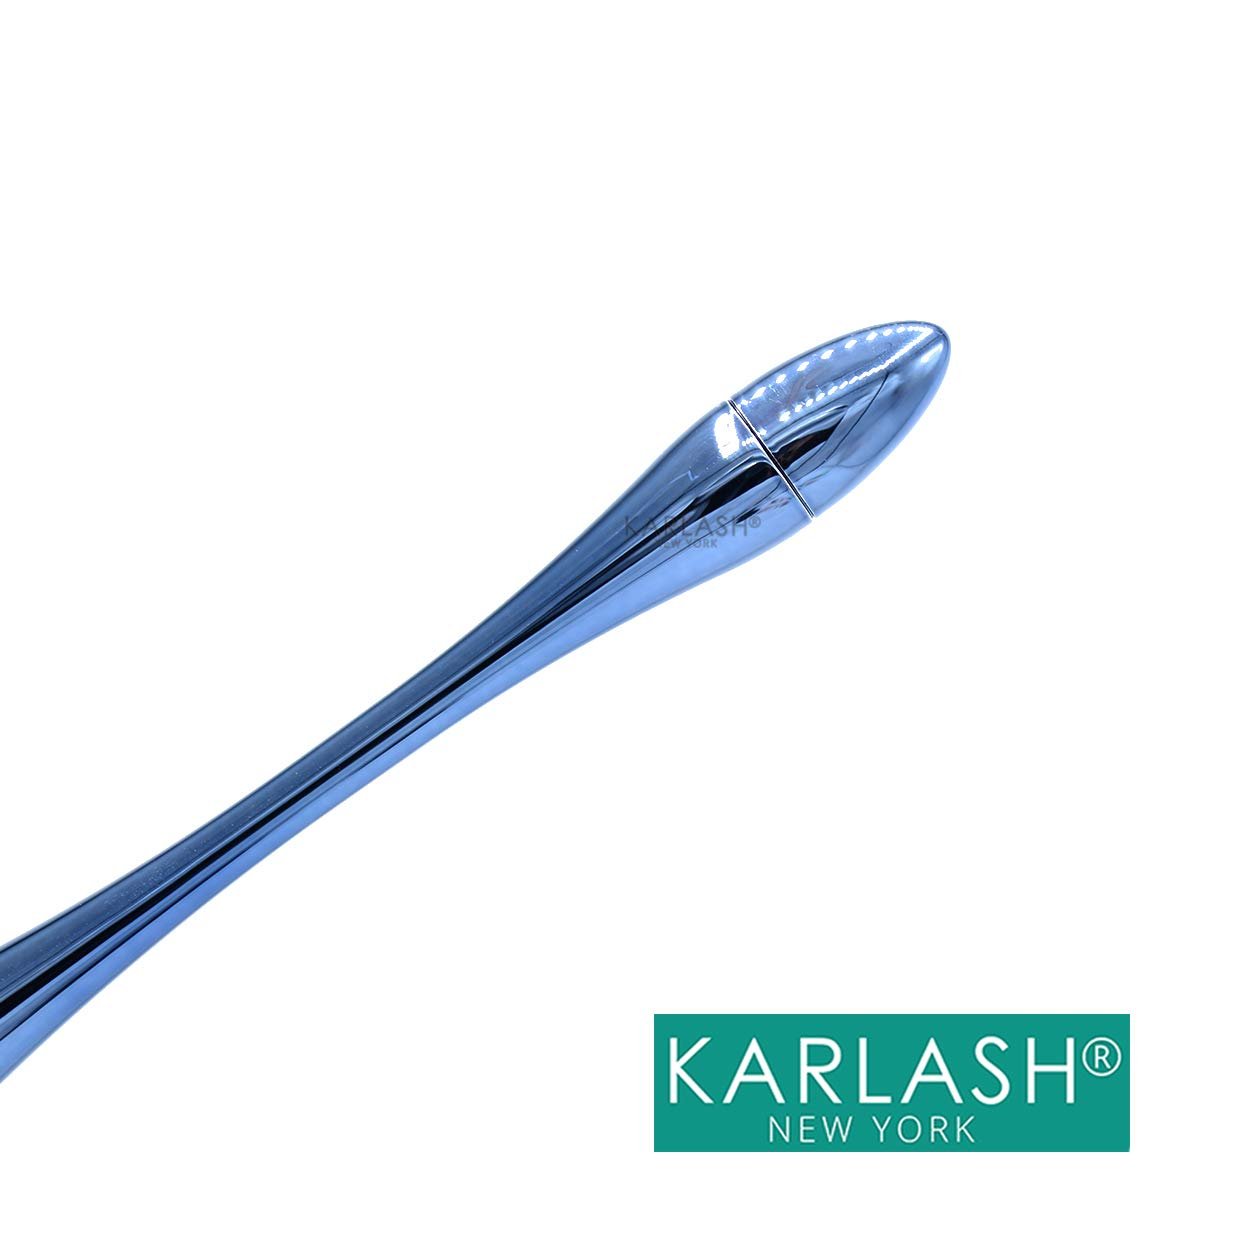 Karlash Nail Art Manicure Dust Remover Brush for Acrylic & UVGel Nails,Makeup Powder Brush #8 (Blue)